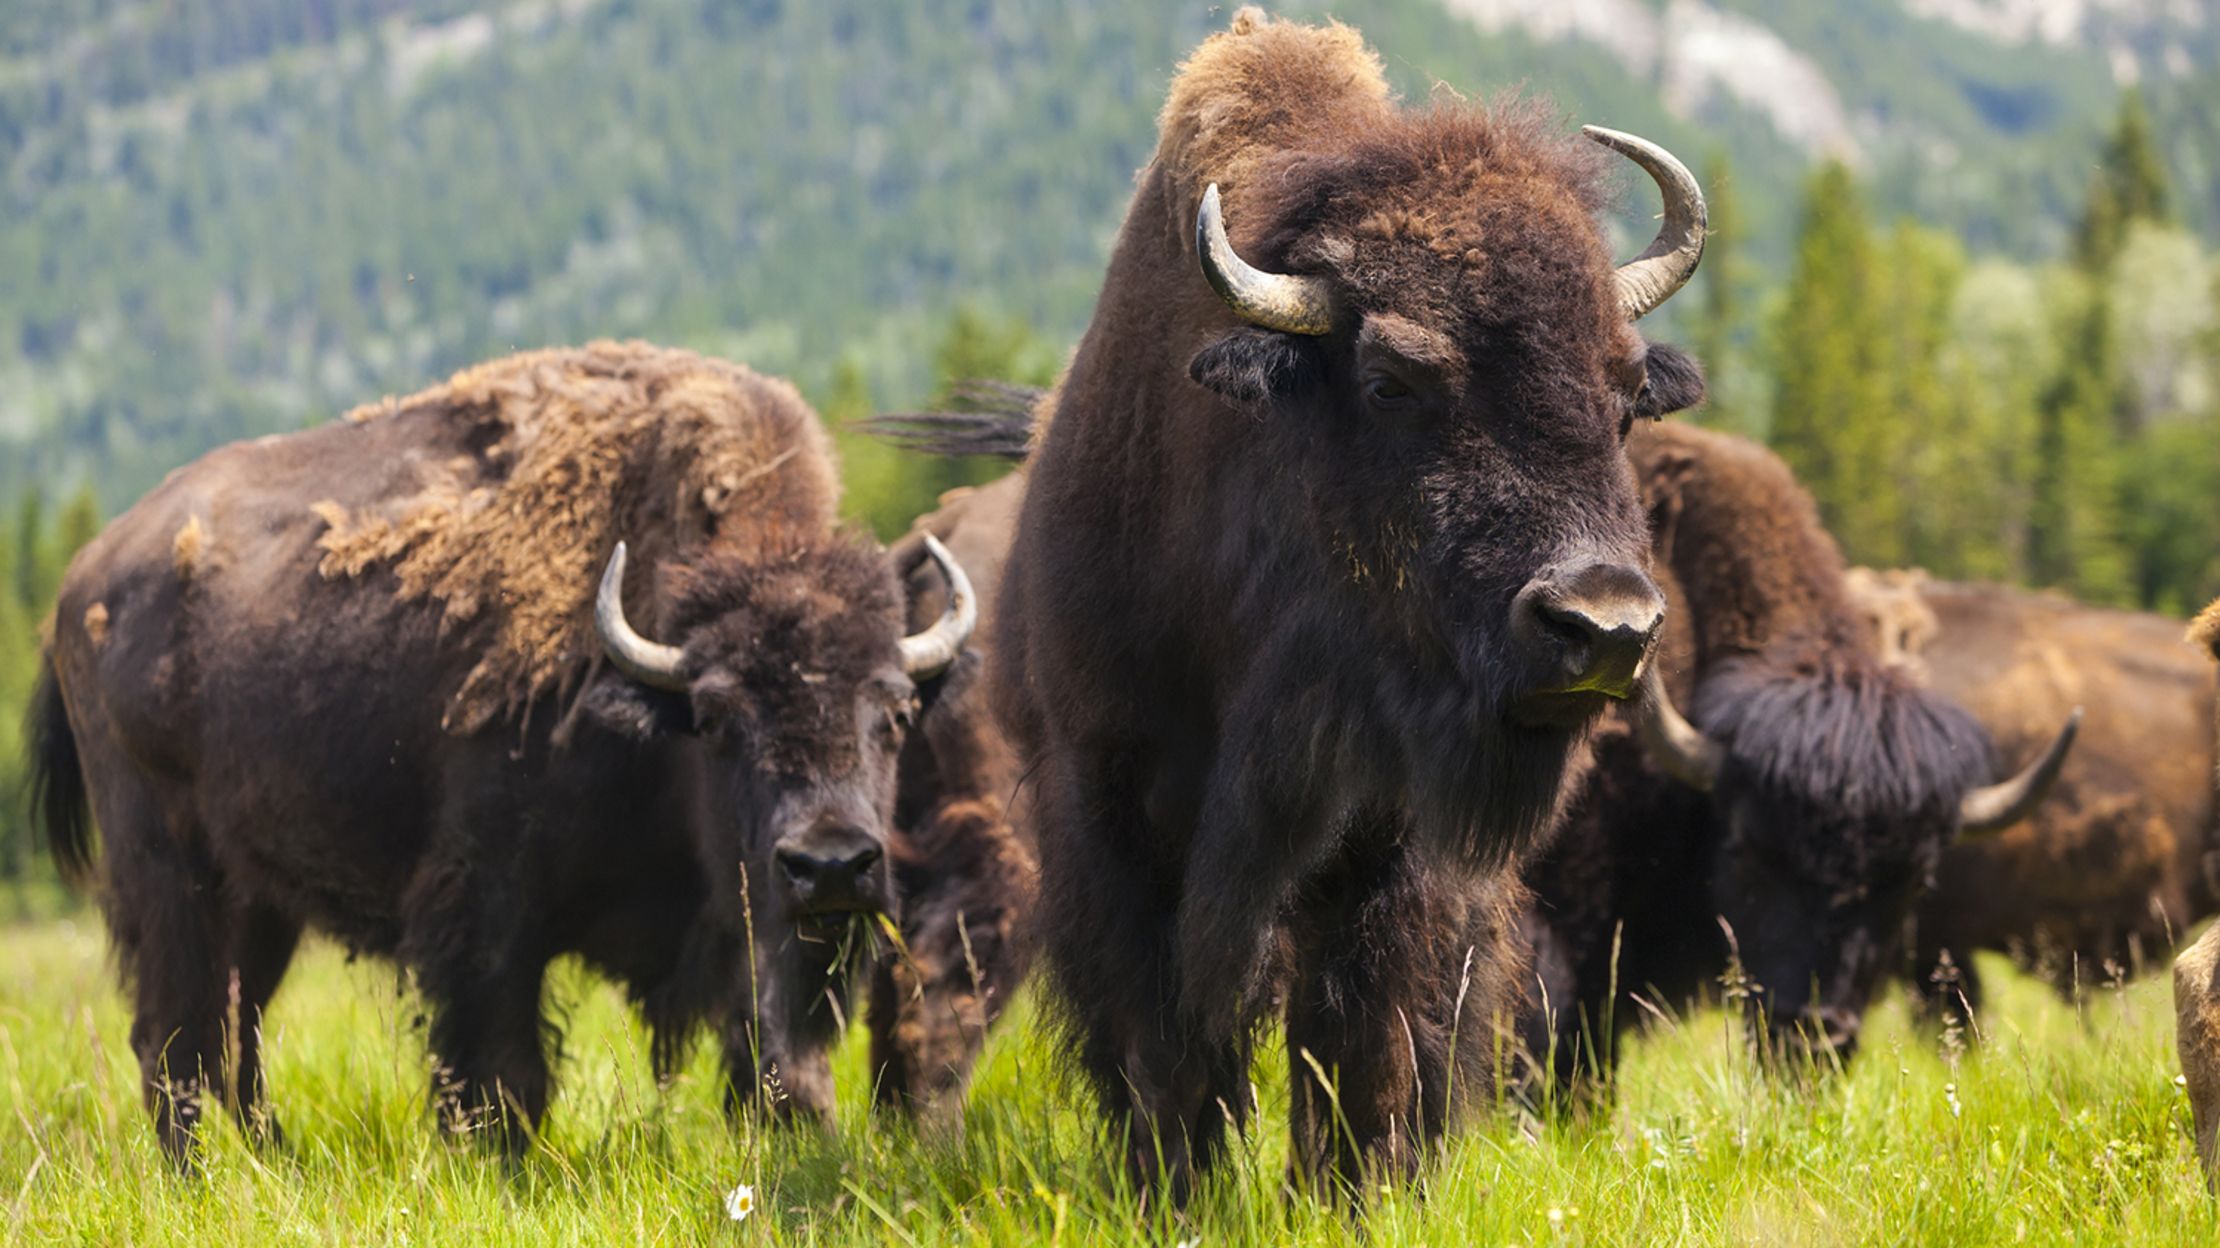 Buffalo buffalo Buffalo buffalo buffalo Buffalo | Floss